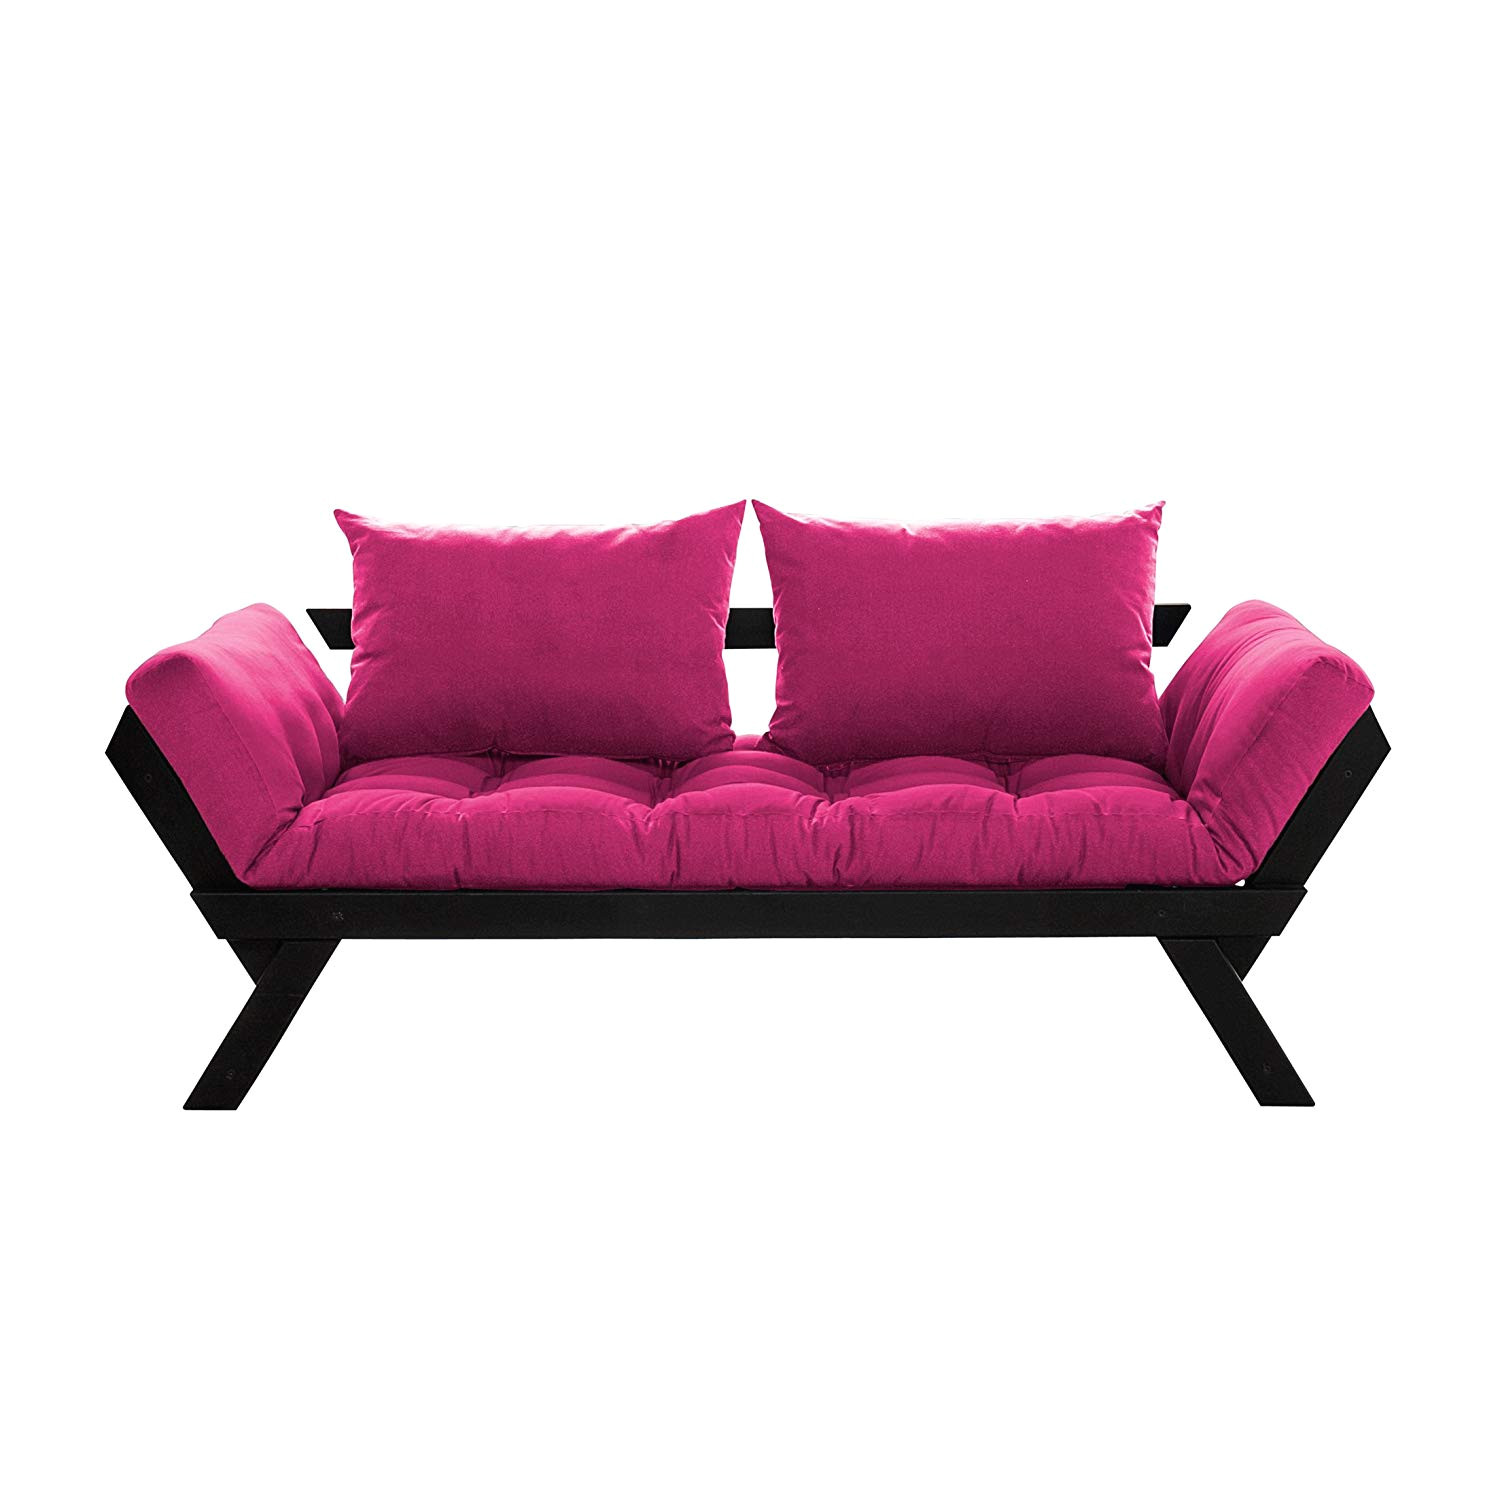 amazon com fresh futon bebop convertible futon sofa bed black frame pink mattress kitchen dining